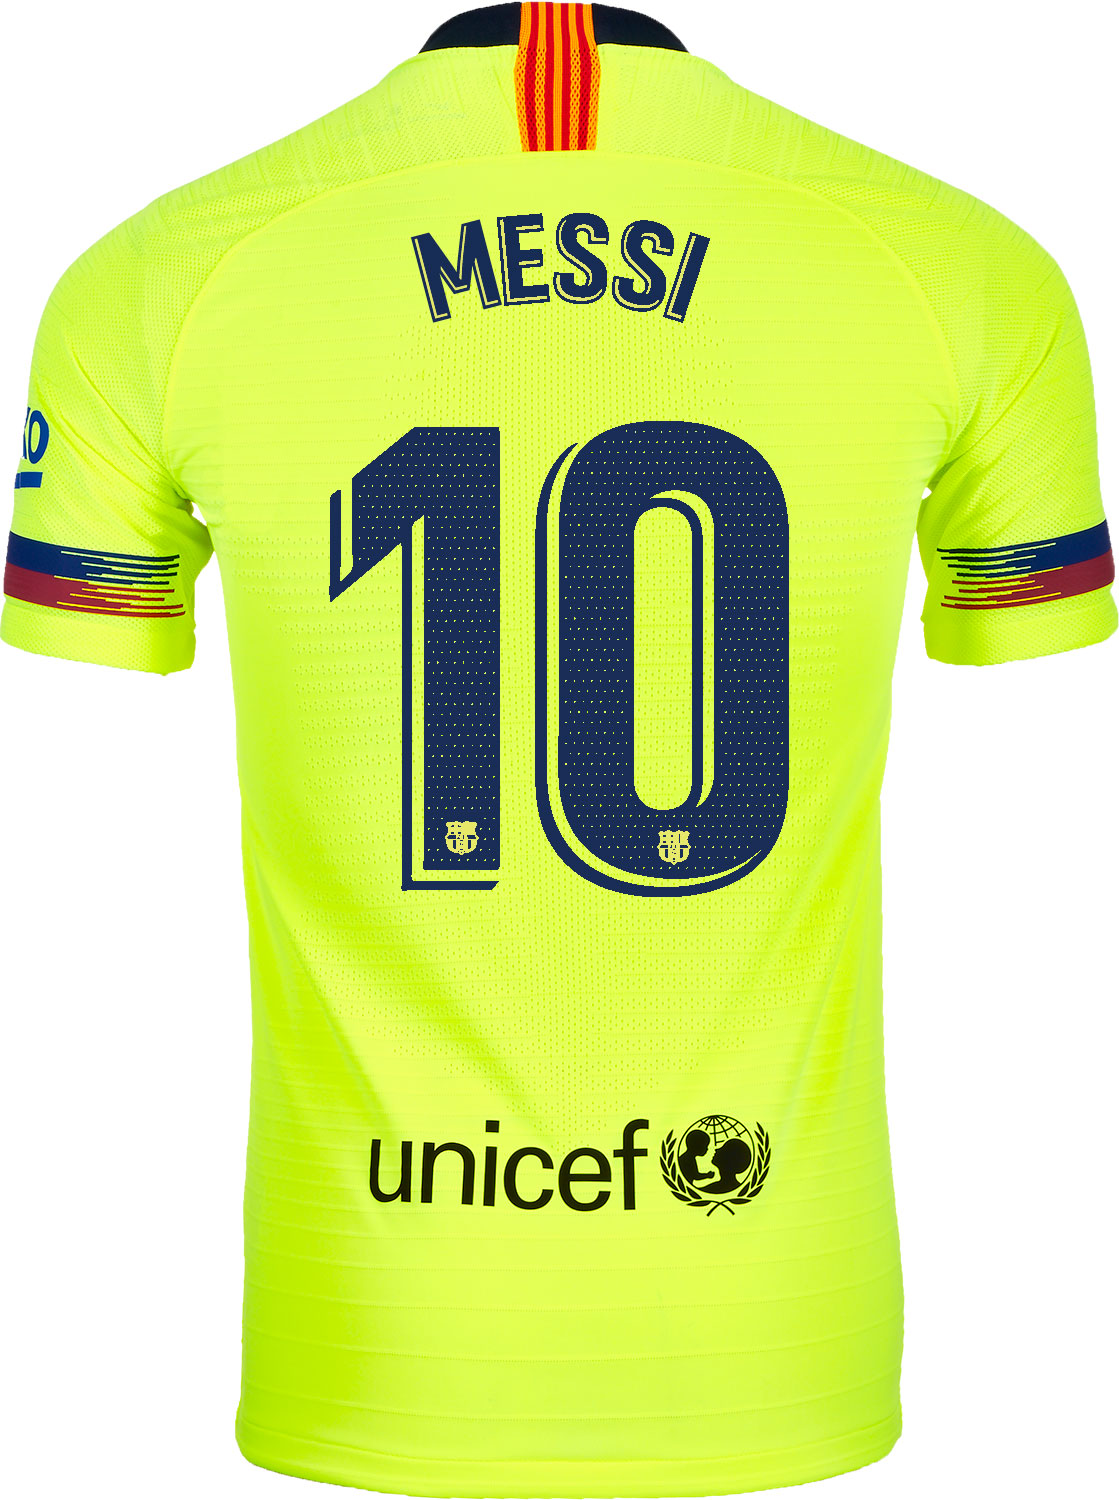 2018/19 Nike Lionel Messi Barcelona Away Match Jersey - SoccerPro